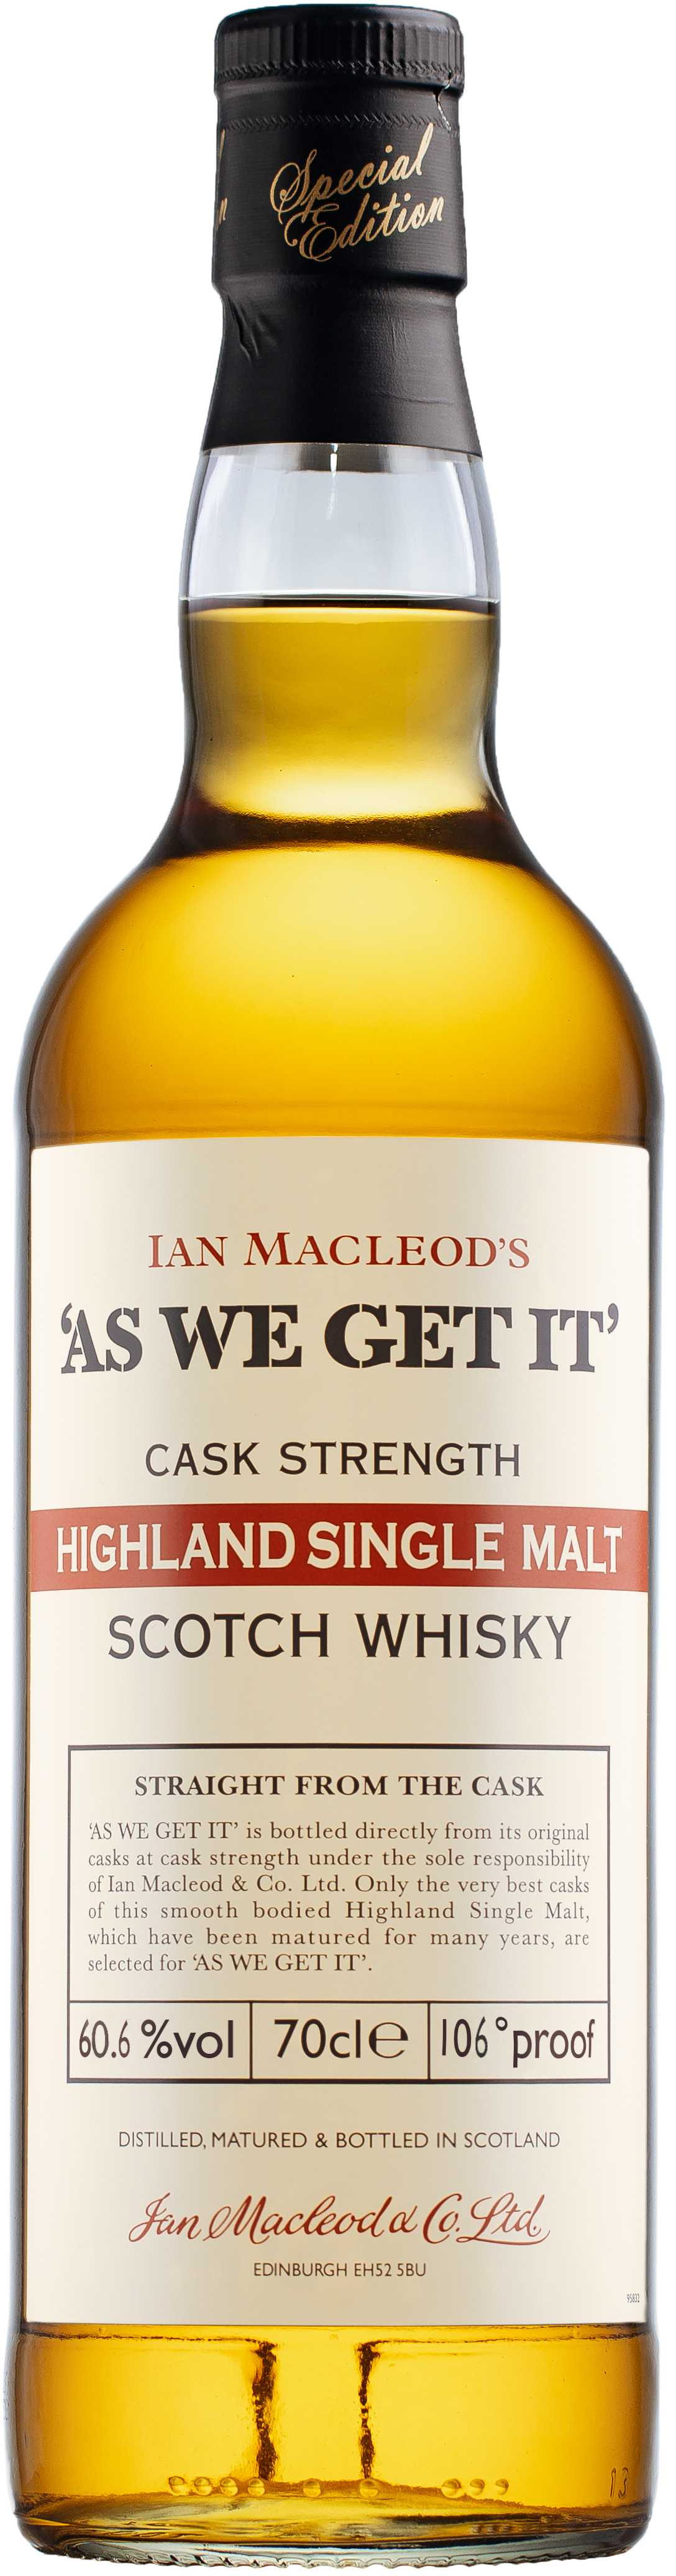 As We Get It Highland Single Malt Scotch Whisky